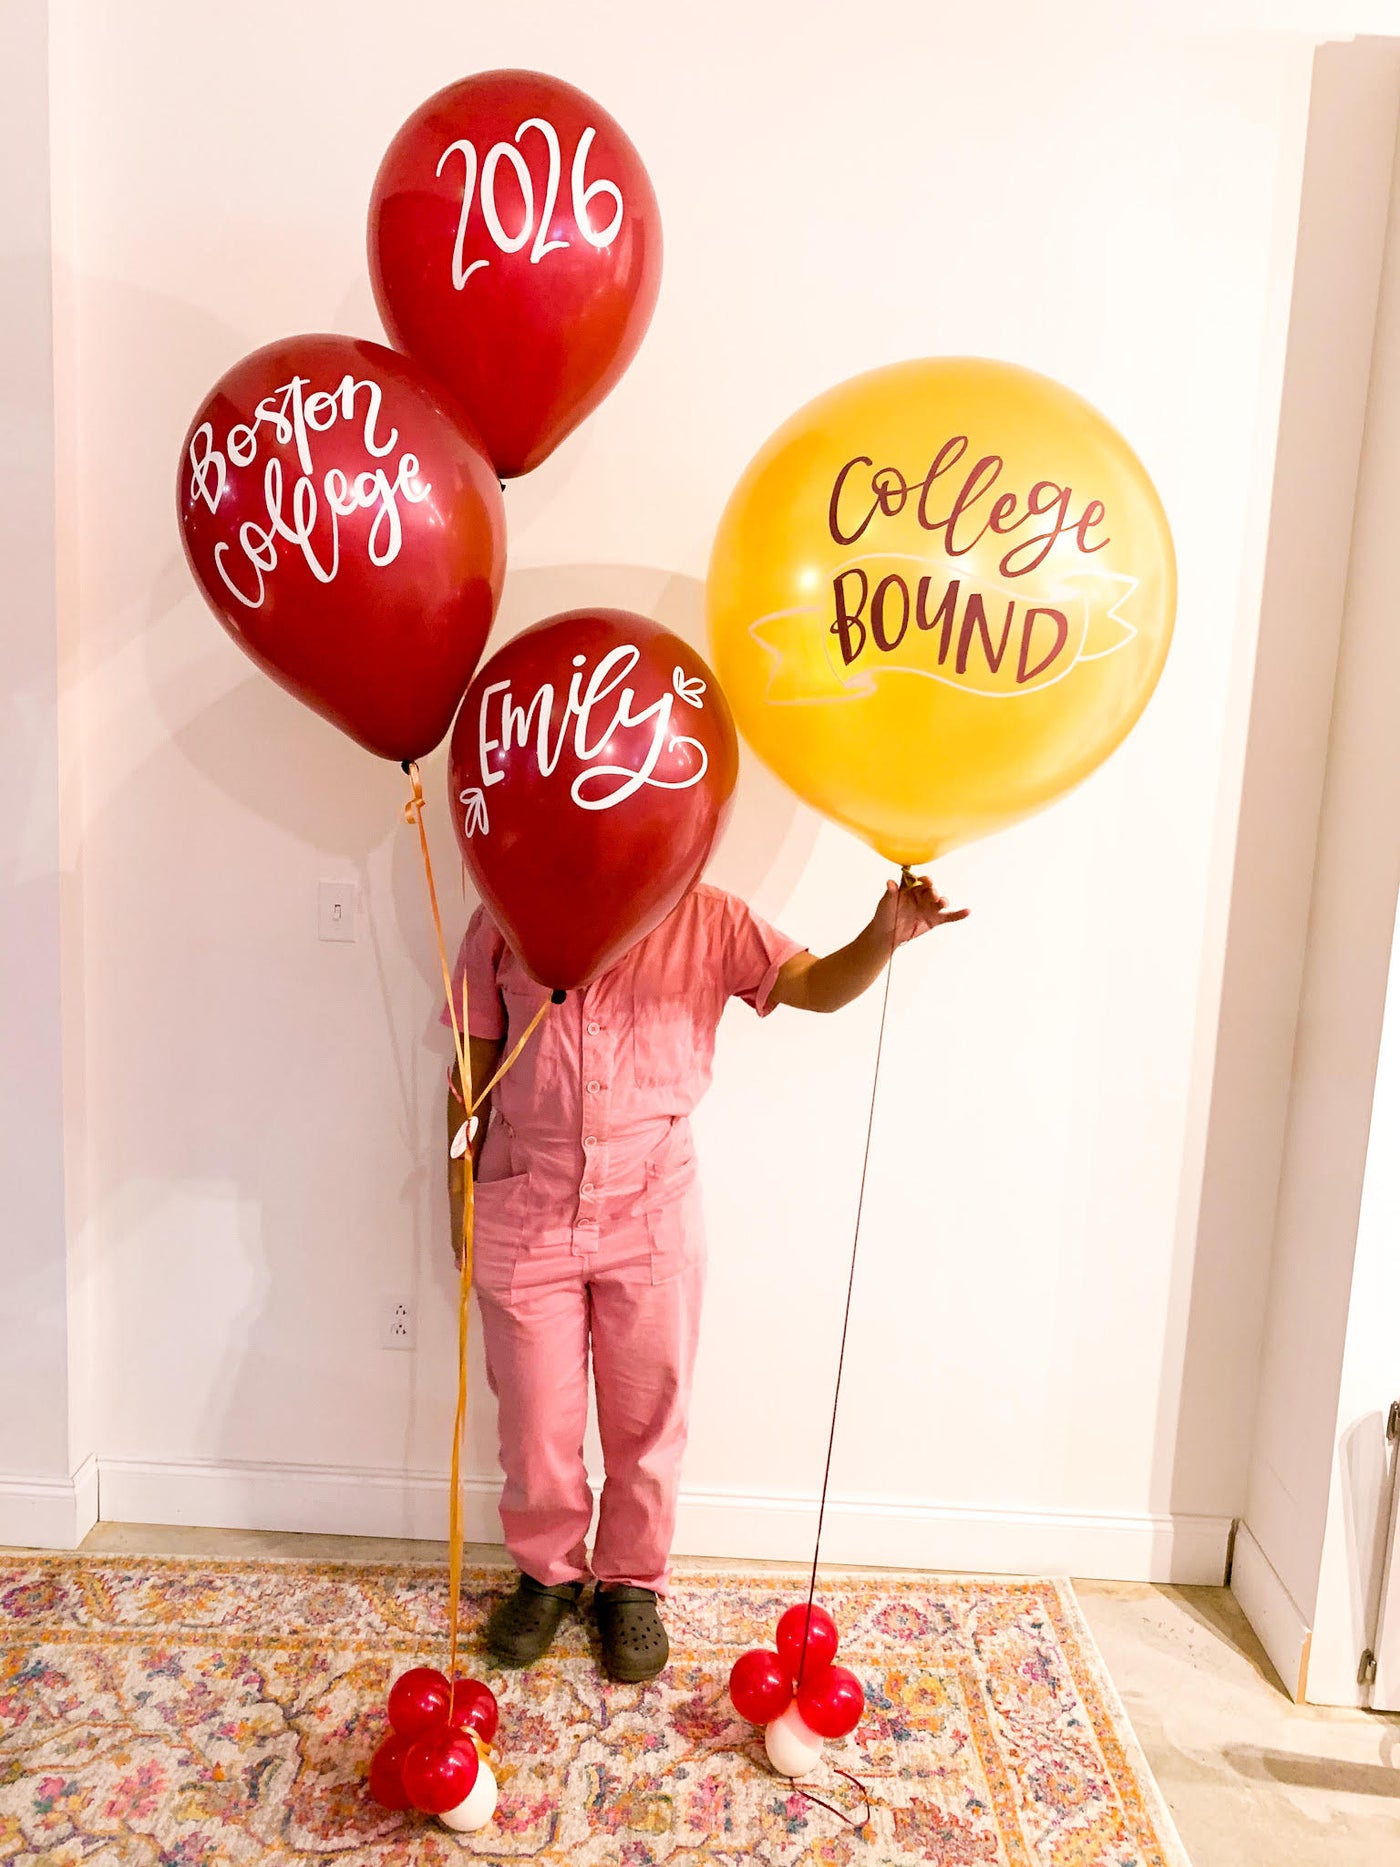 College Bound Medium Custom Jumbo with 3 Custom Balloons